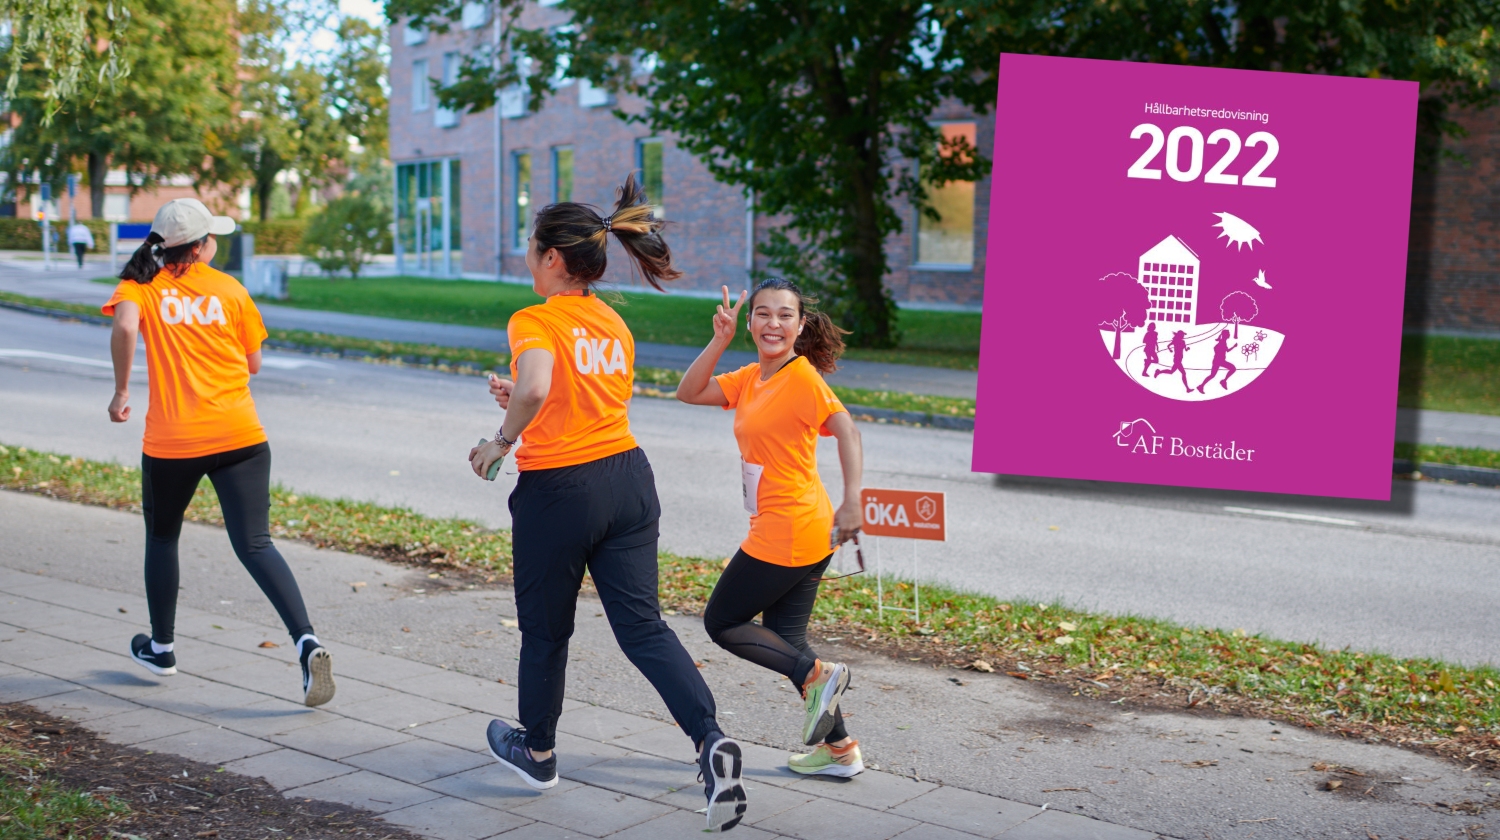 Bild på tre som springer Marathon marathon med en bild på hållbarhetsredovisningen 2022